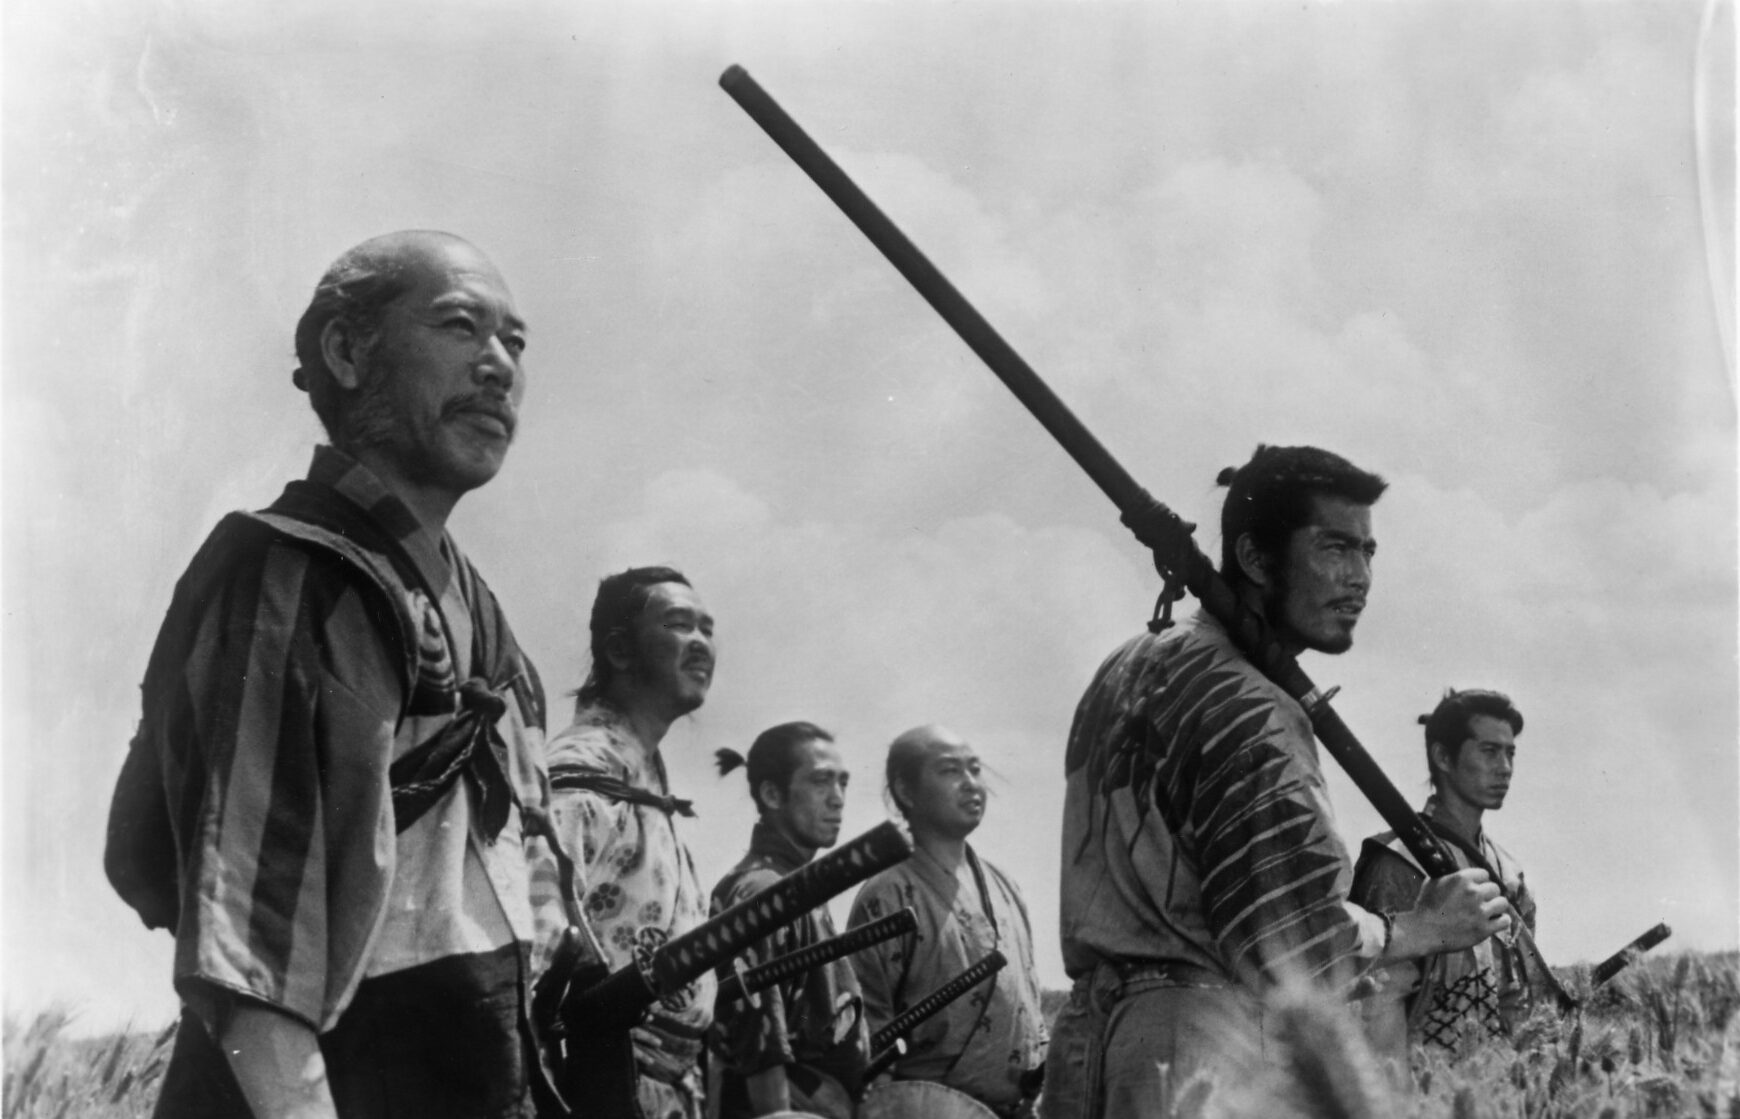 Akira Kurosawa at the MALBA: a special January film season